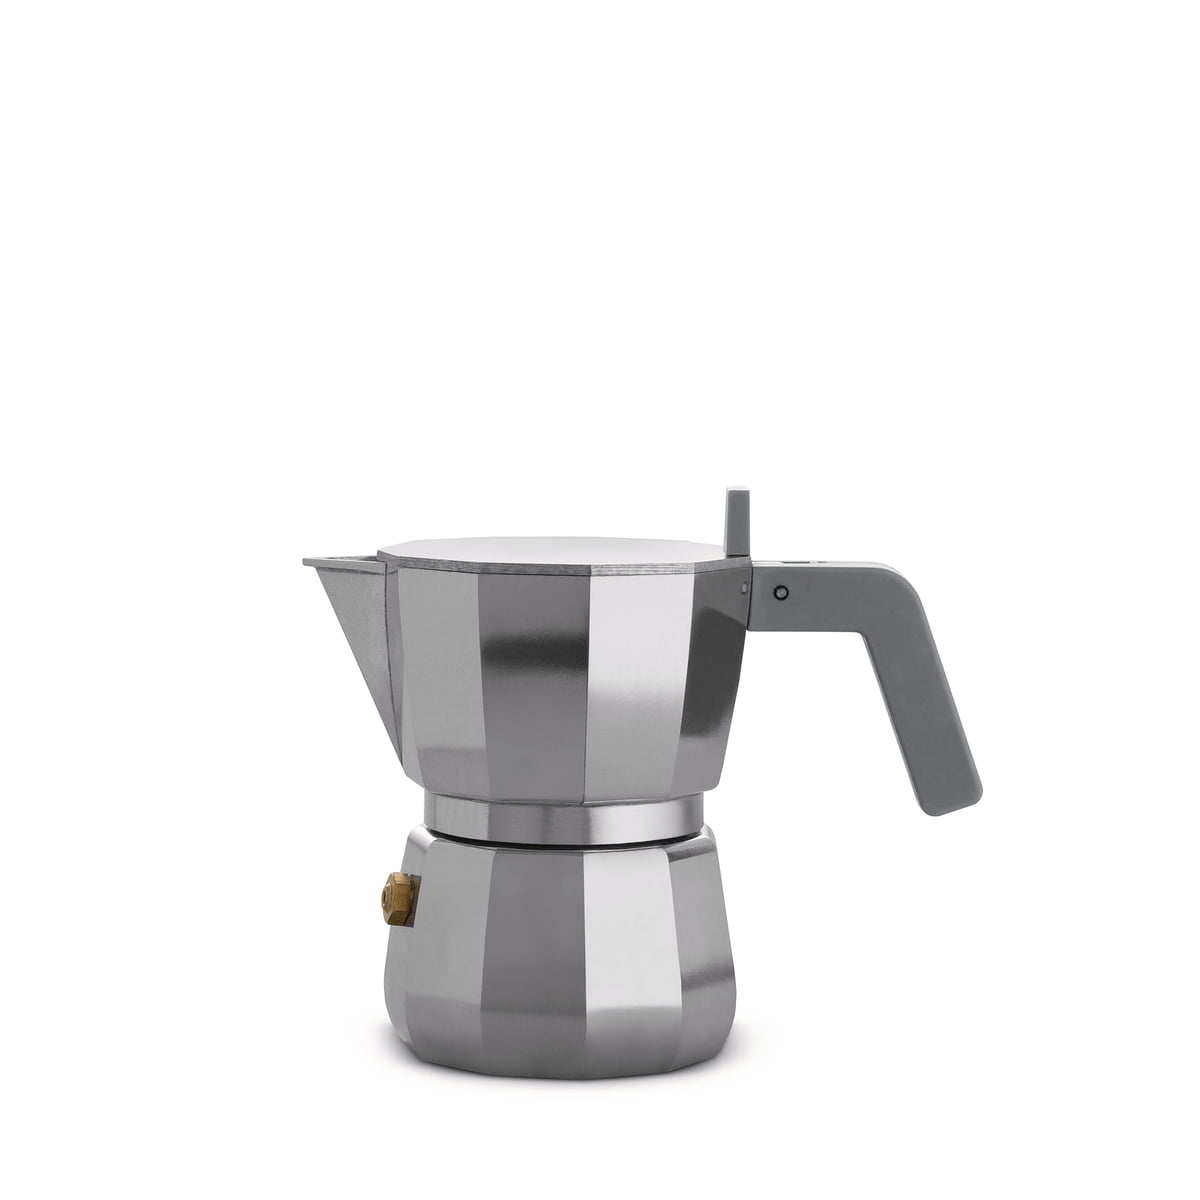 https://cdn.connox.com/m/100030/250584/media/alessi/Moka-Alessi/Alessi-Moka-Espressokaffeekanne-1-Tassen-grau-Freisteller.jpg